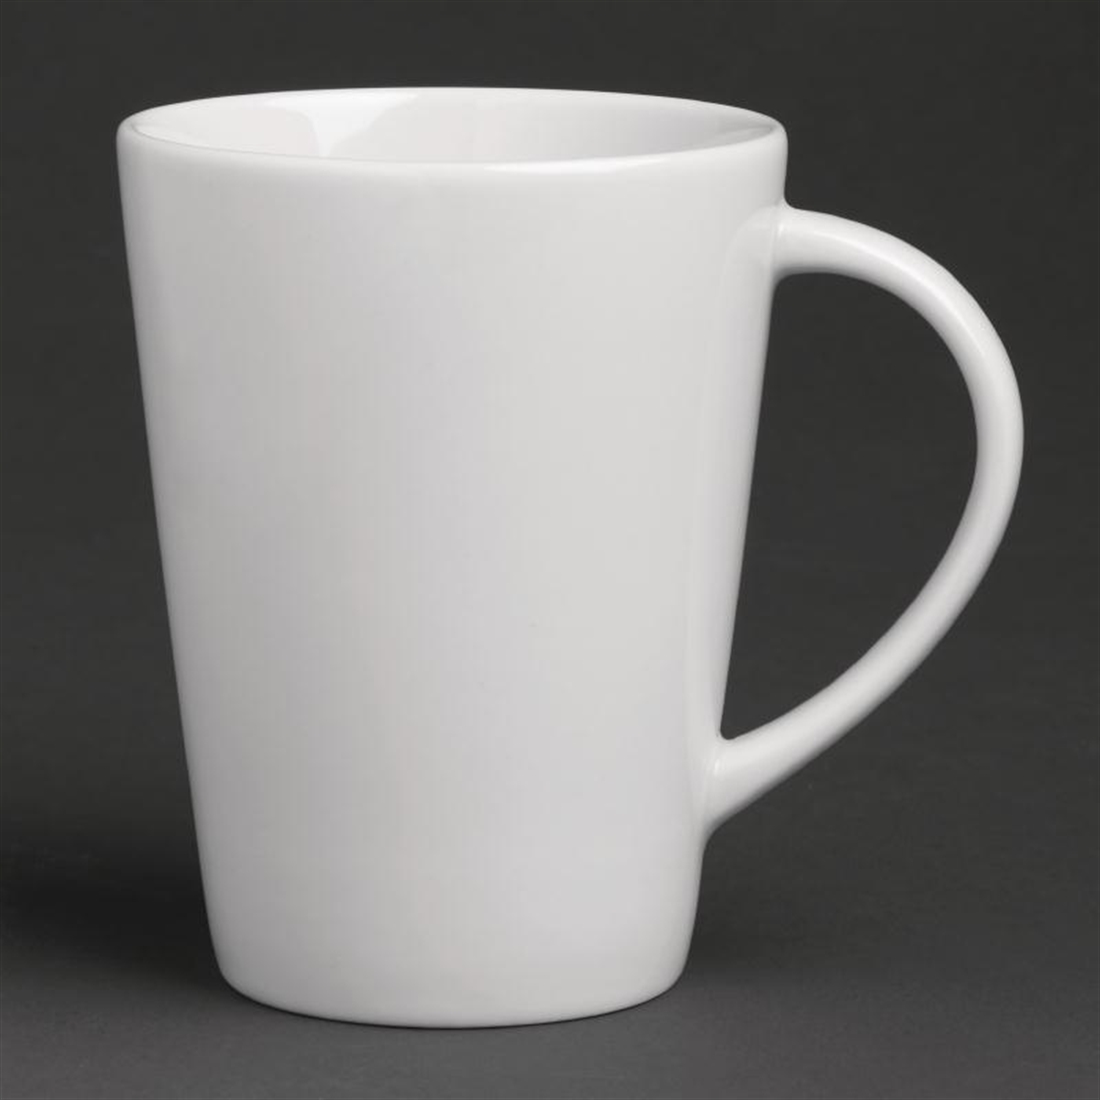 Royal Porcelain Classic White Mug 275ml